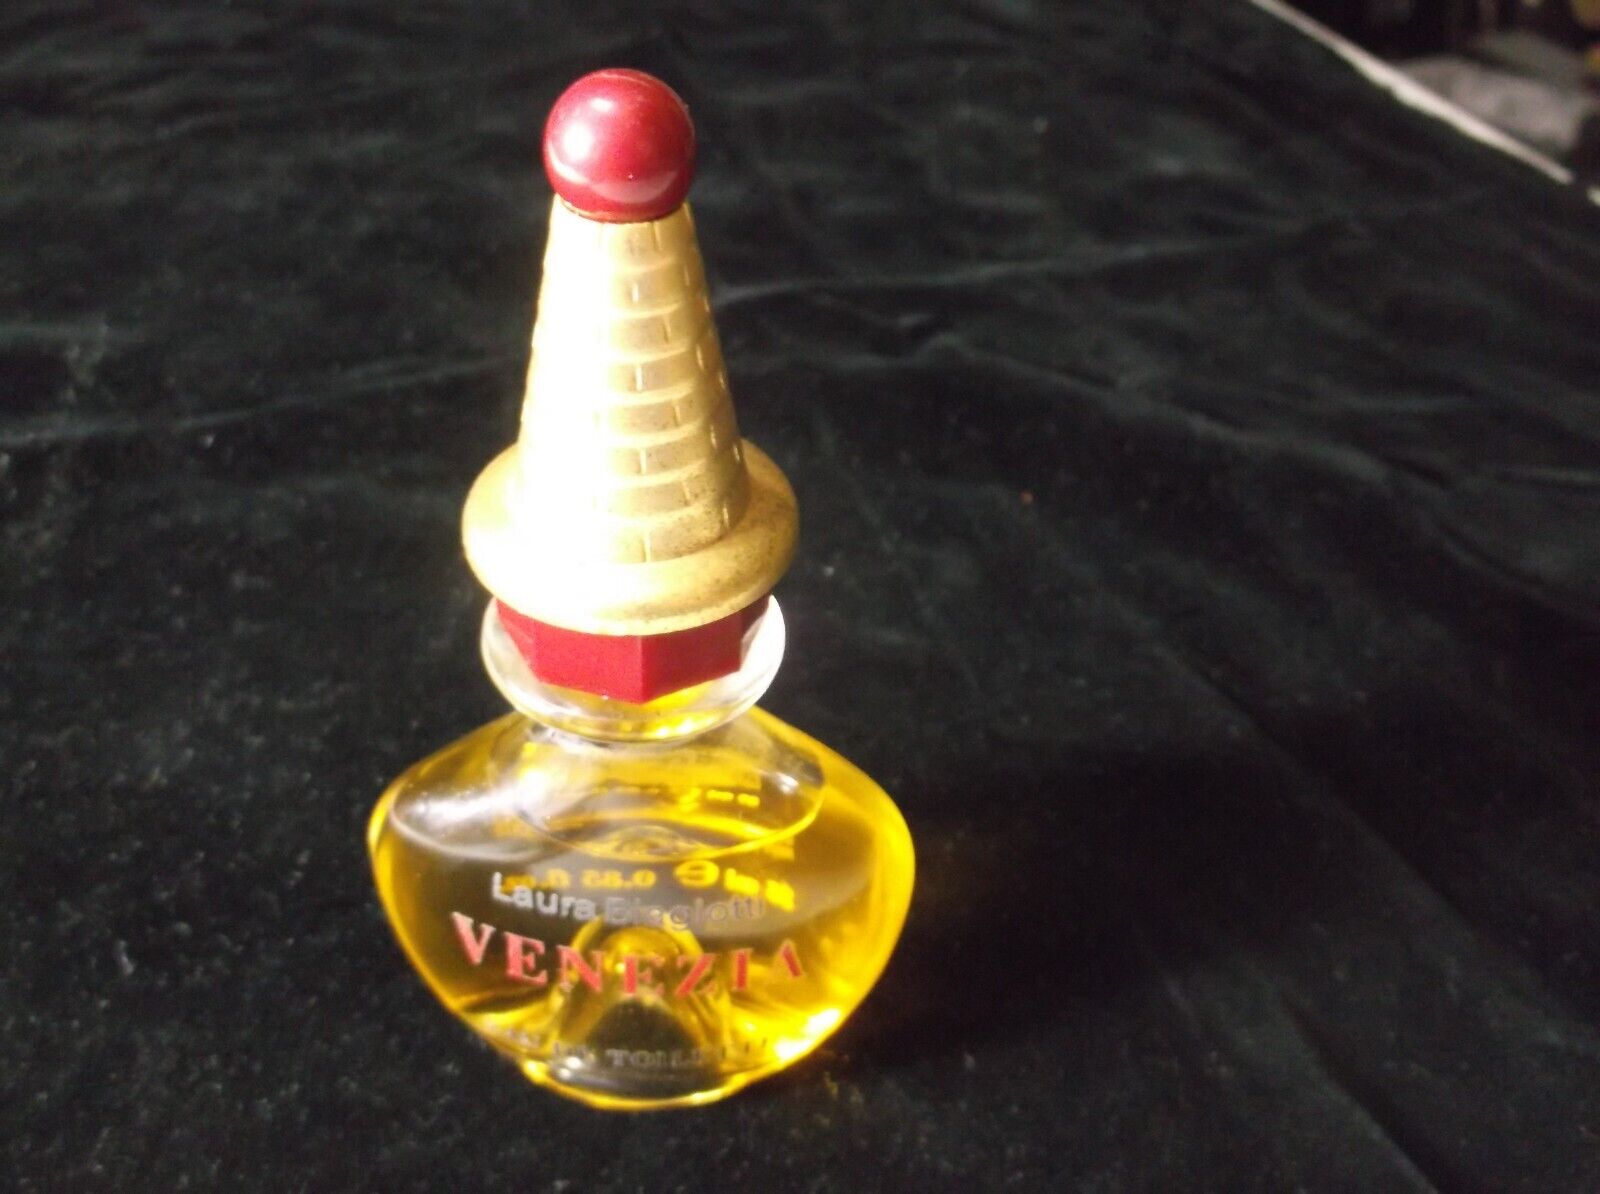 Vintage VENEZIA Laura Biagiotti Eau De Toilette Fragrance Perfume Splash 25ml